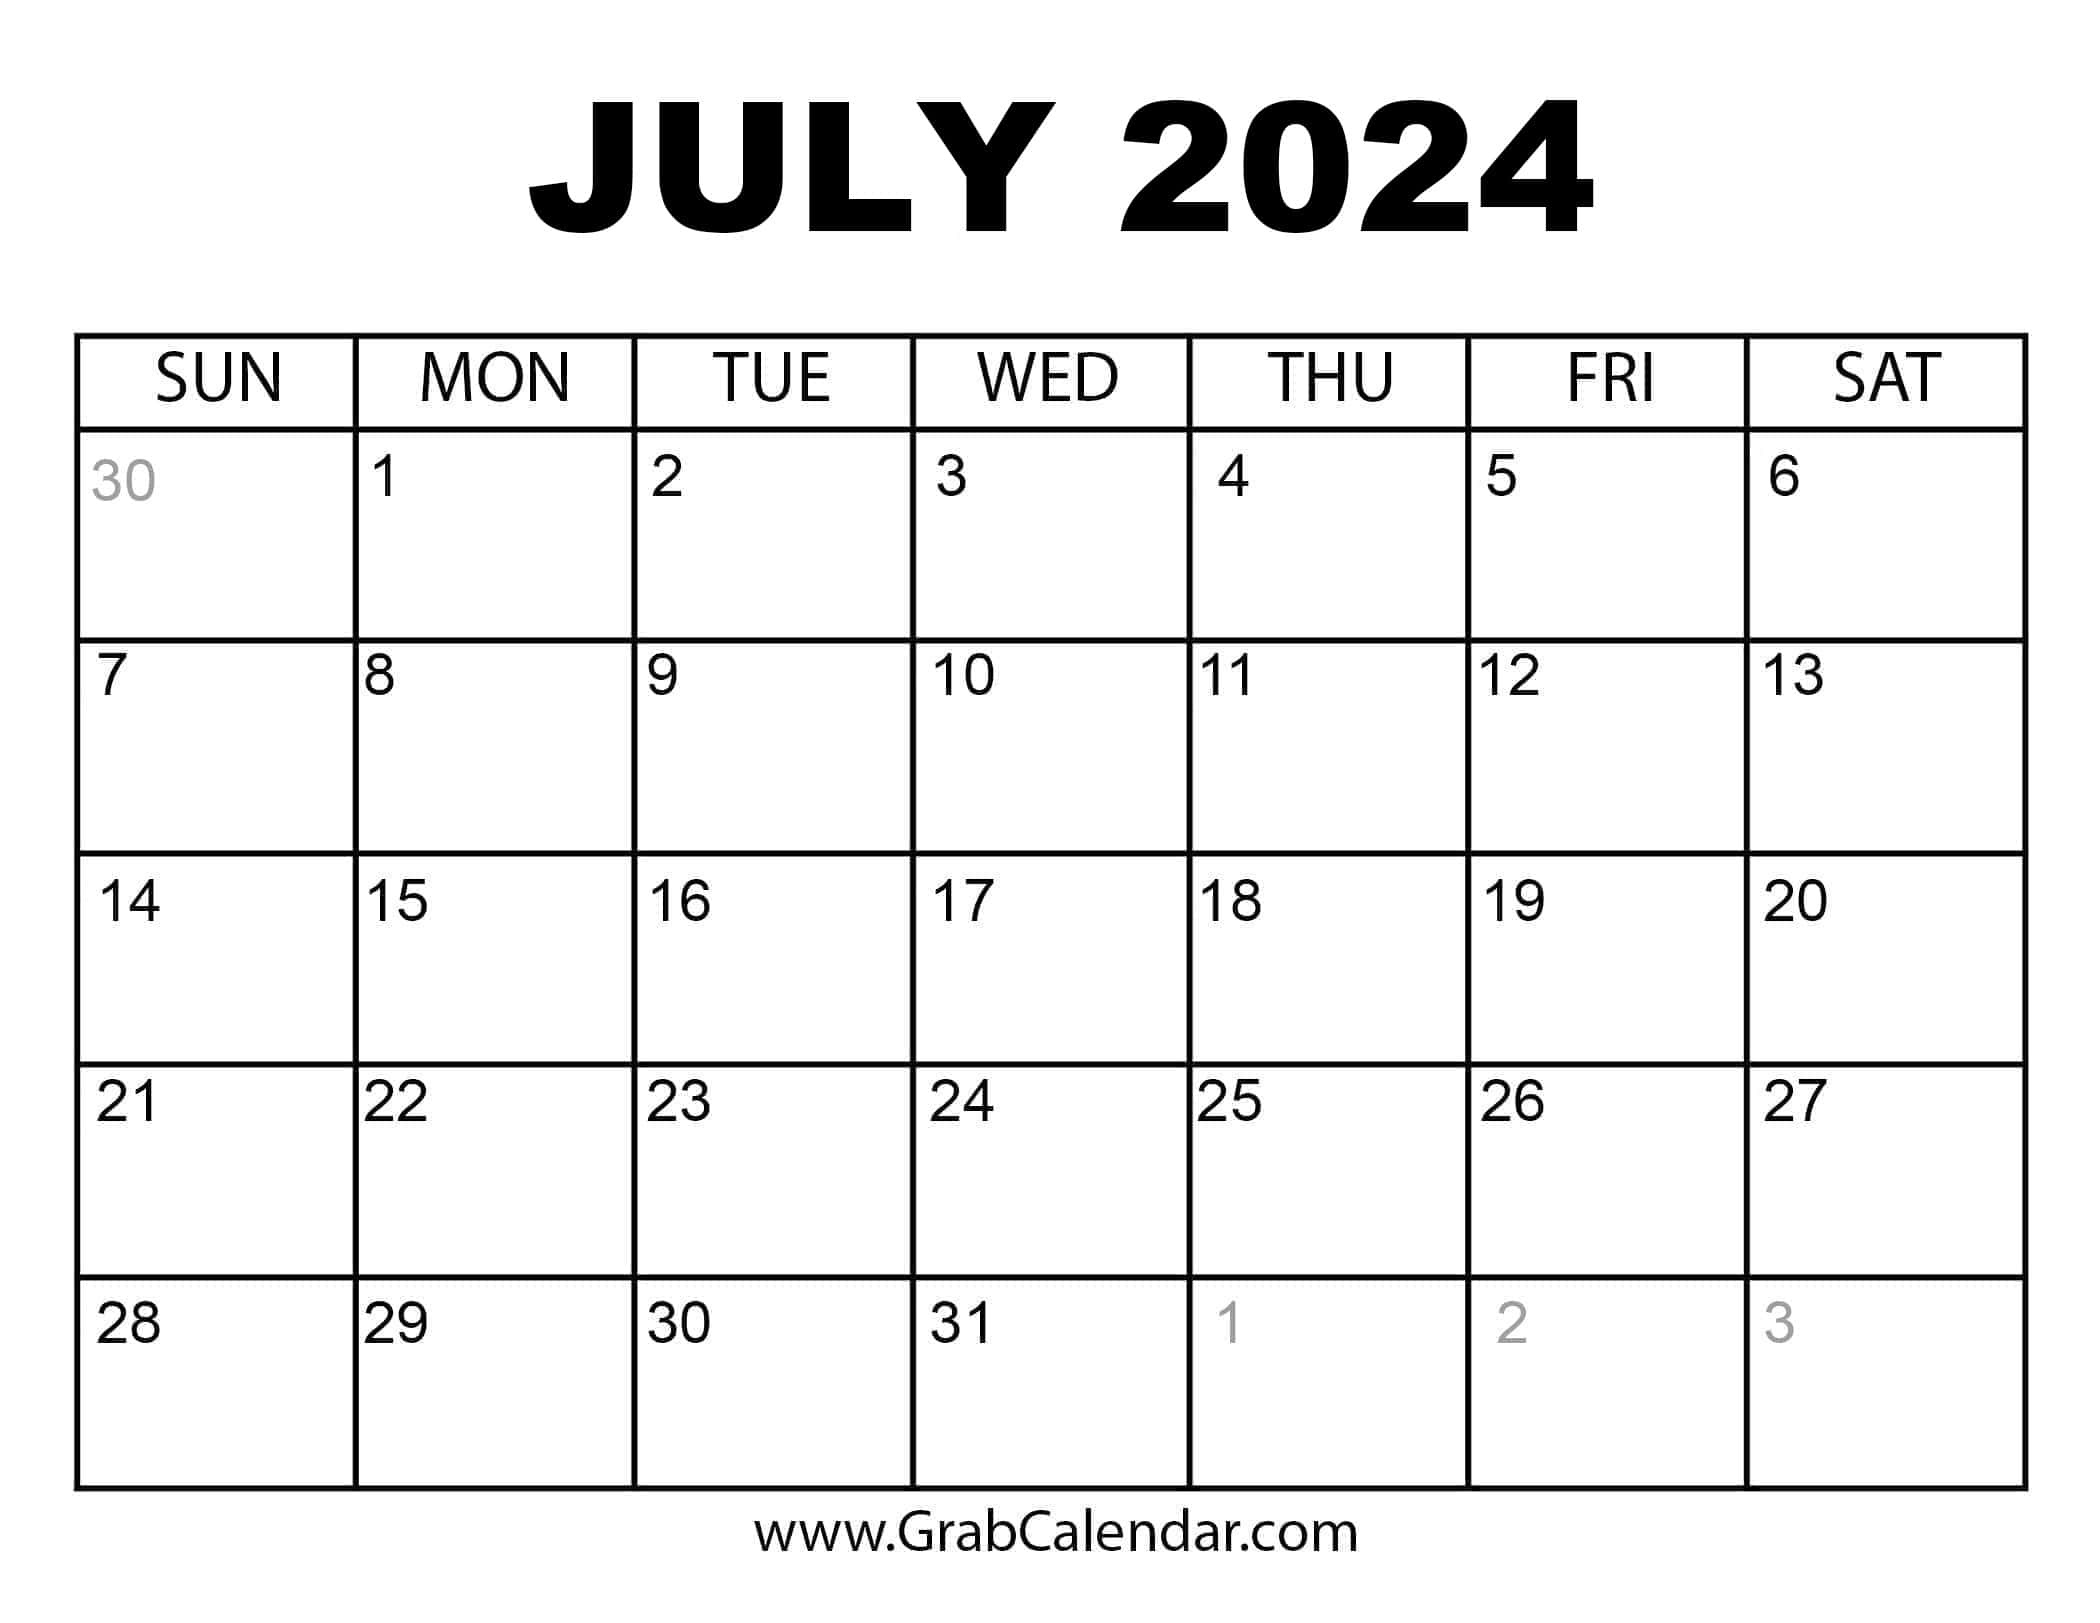 Printable July 2024 Calendar intended for 2024 July Monthly Calendar